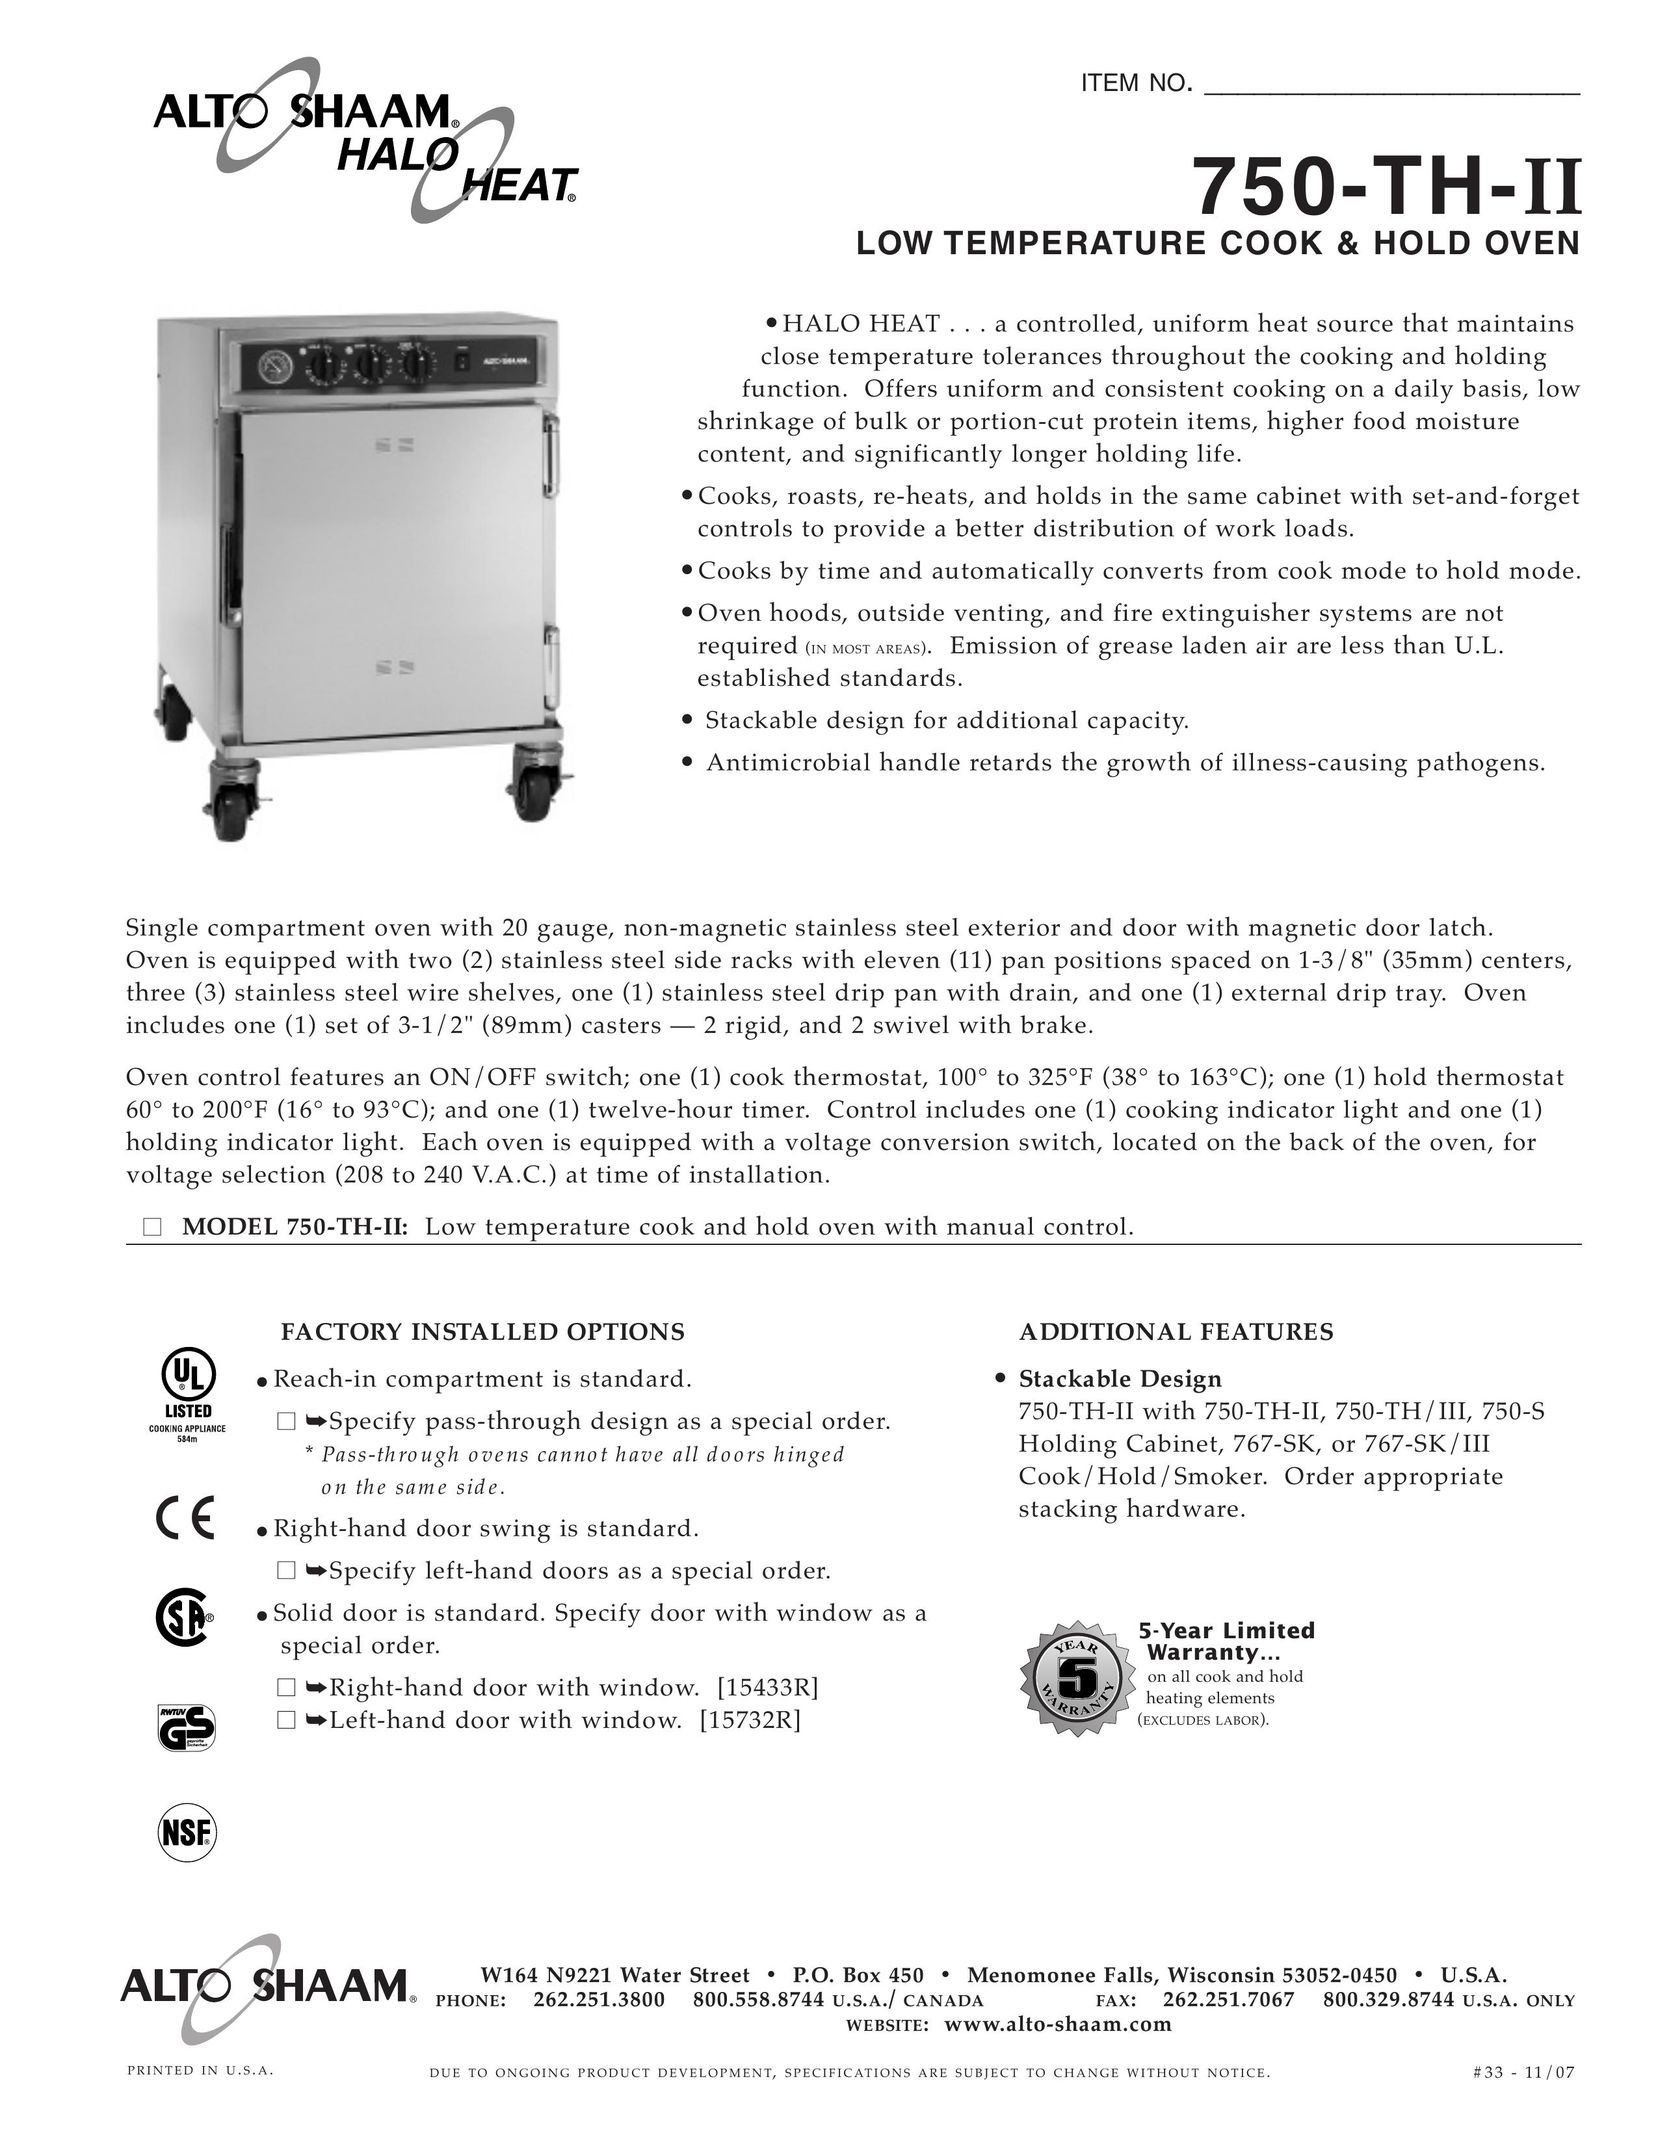 Alto-Shaam 750-TH-II Microwave Oven User Manual